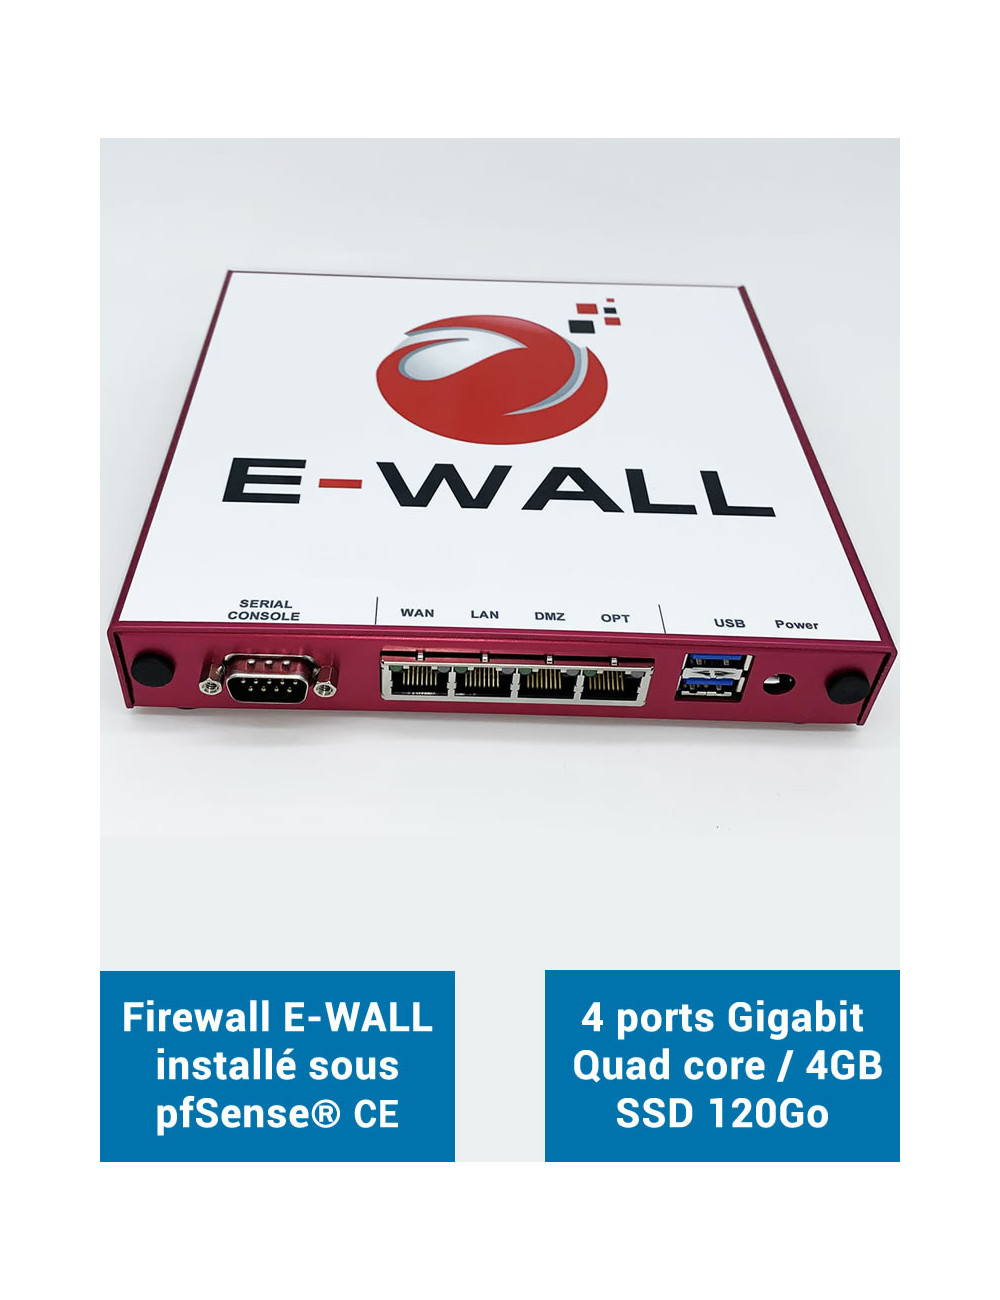 Firewall Appliance AP444 under pfSense® CE 4 ports 4GB SSD 120GB